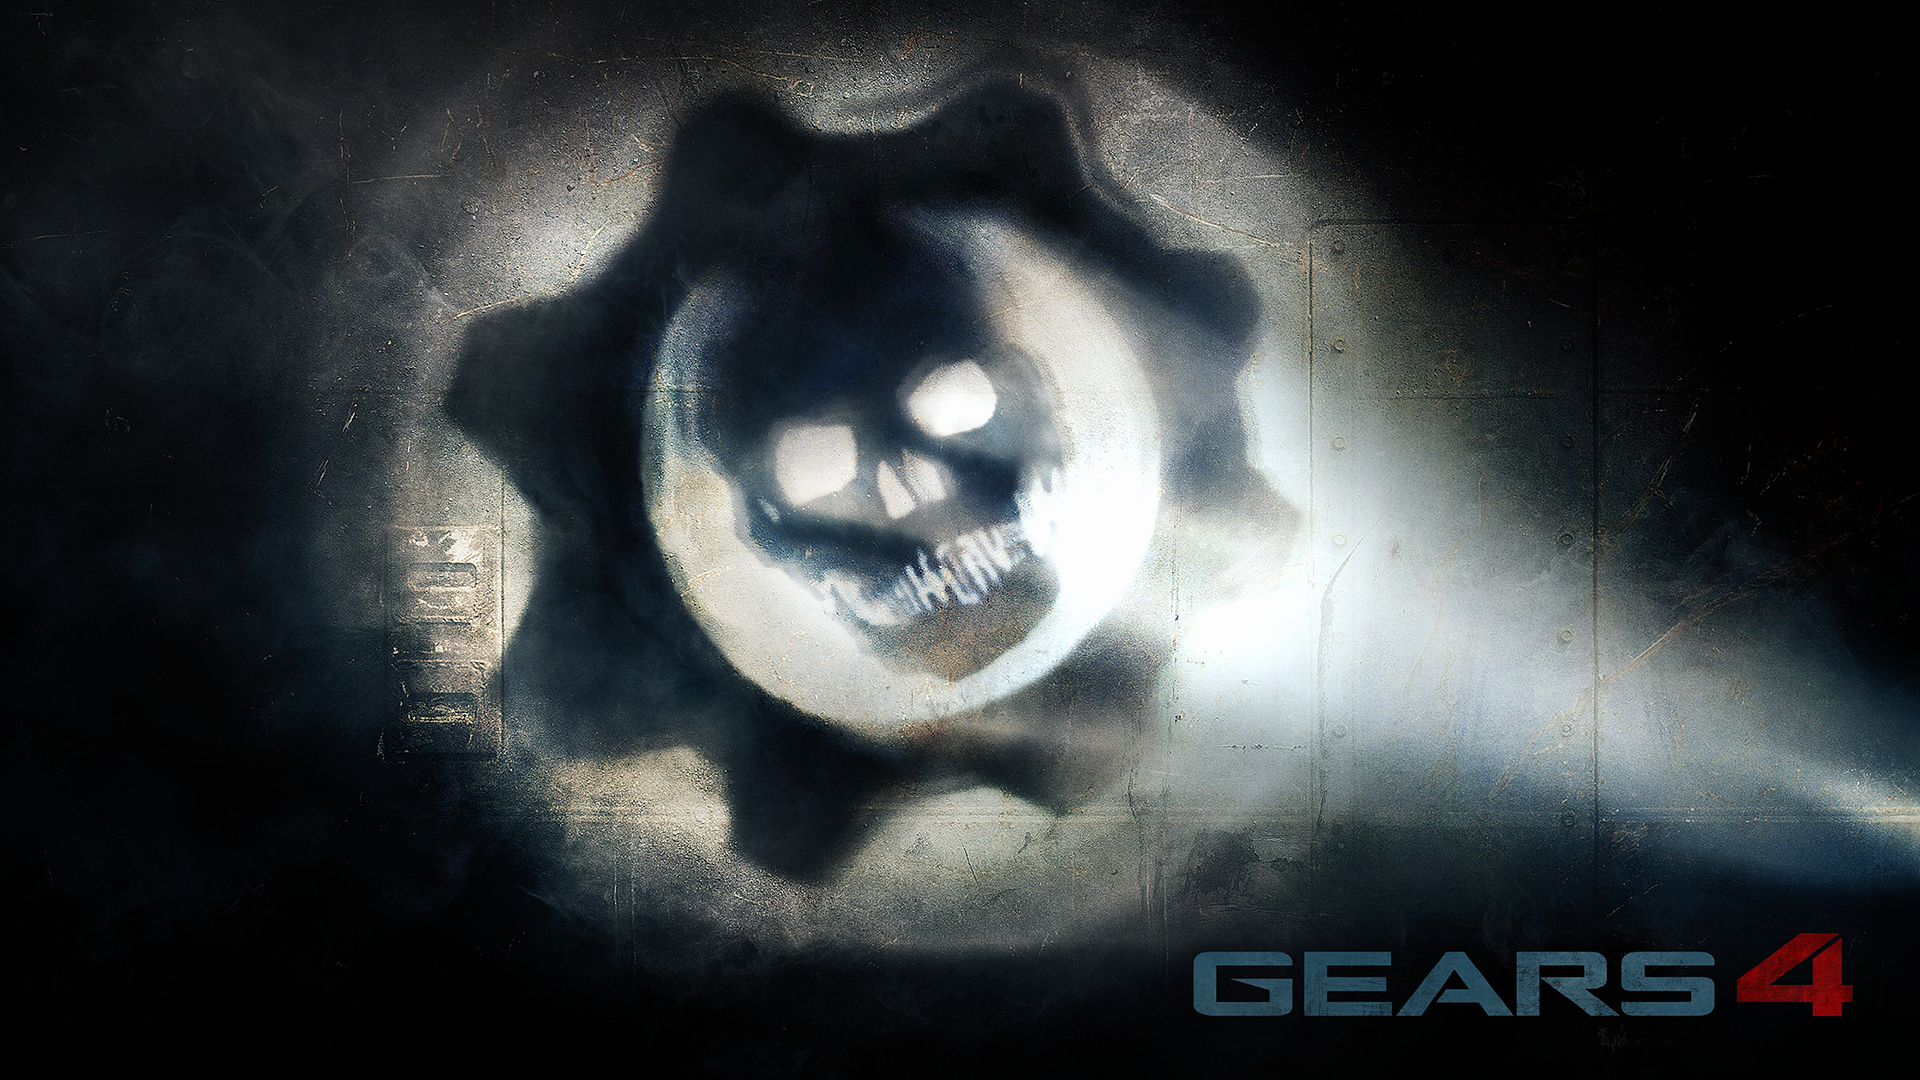 Gears of War 4 is released